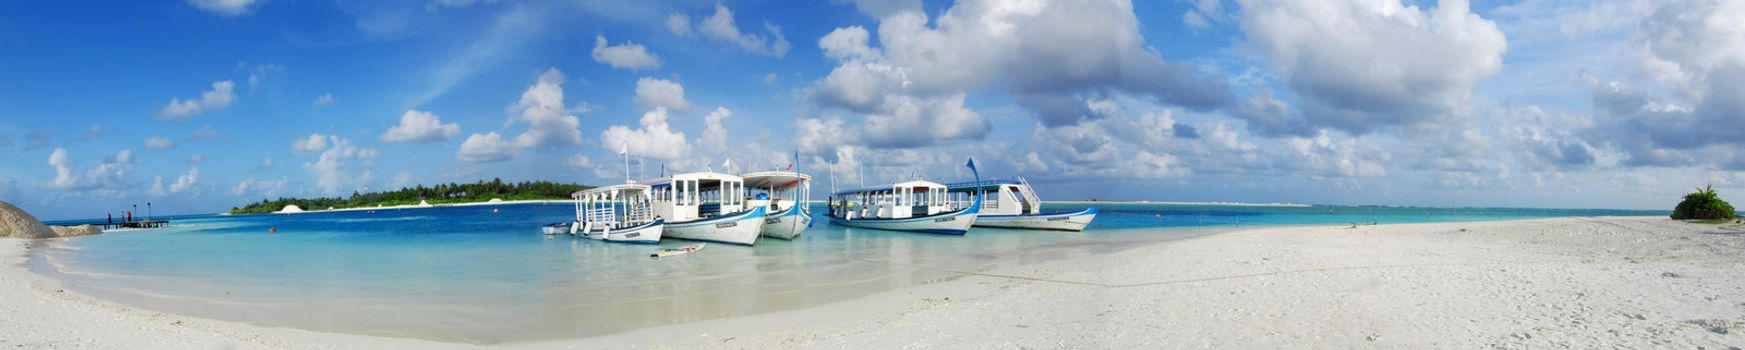 Beautiful white Maldivian beach and five dhoni ships docked nearby